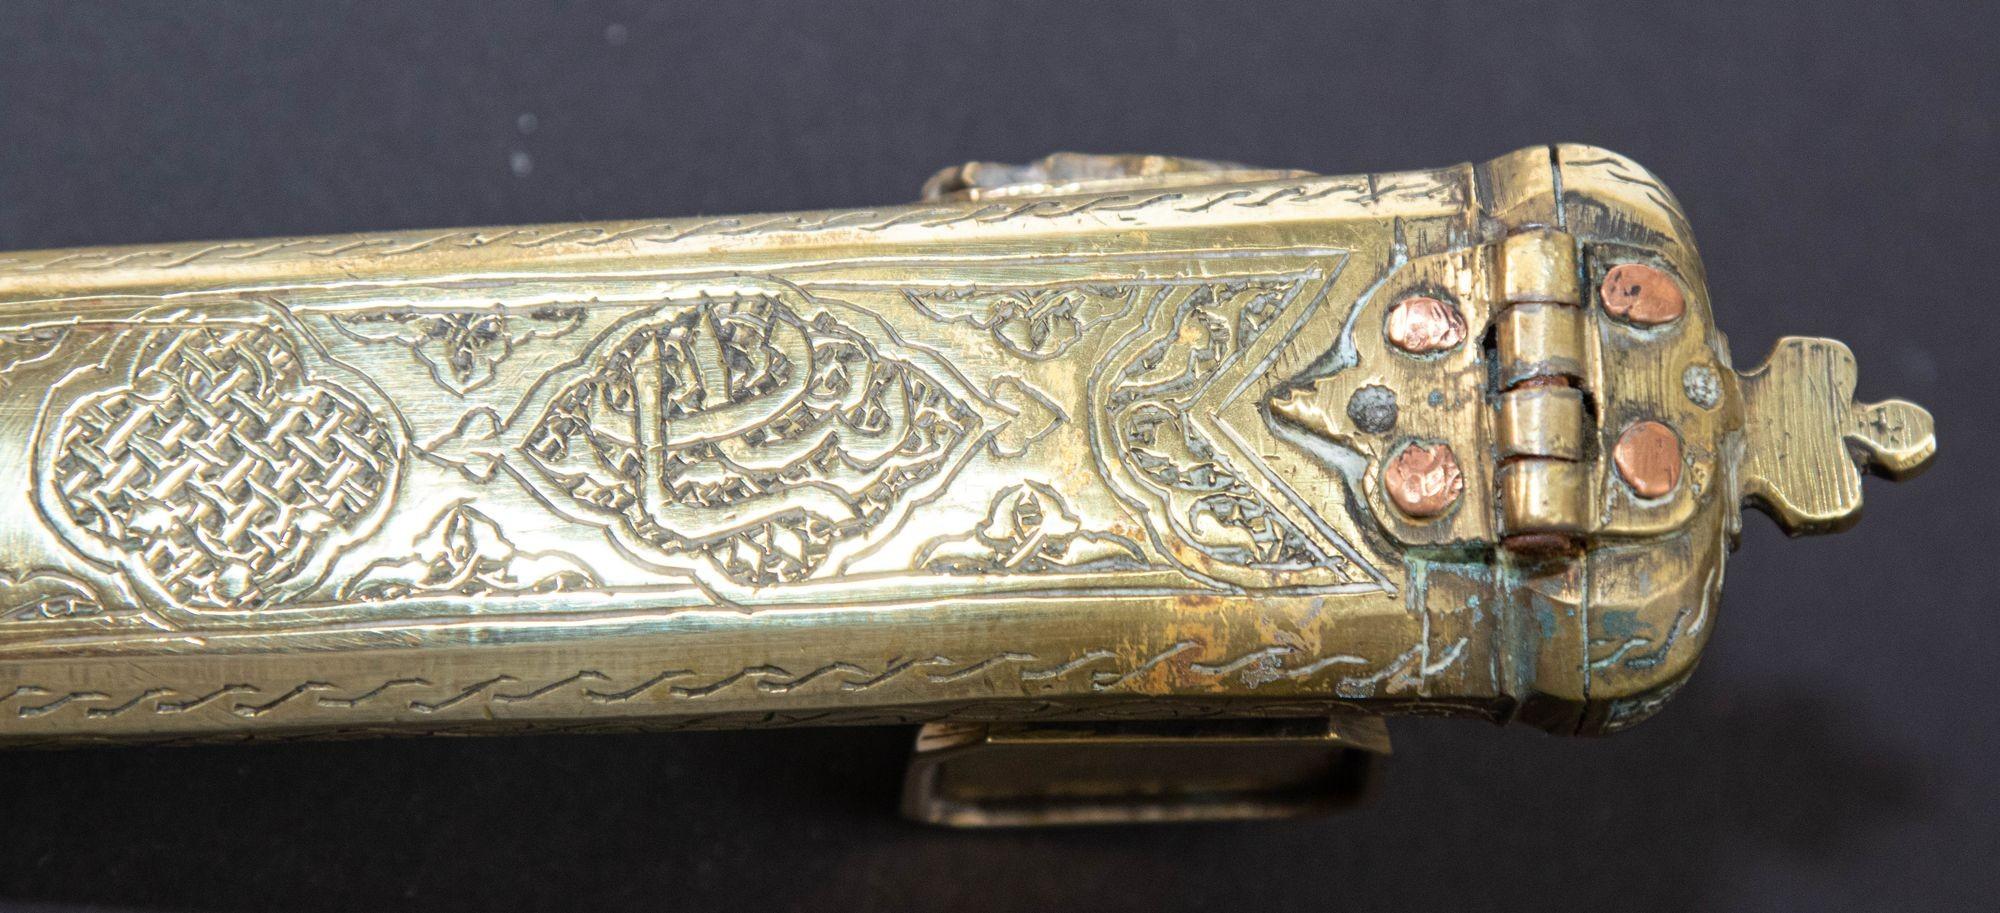 Antique Ottoman Turkish Brass Inkwell Qalamdan with Arabic Calligraphy Writing For Sale 3